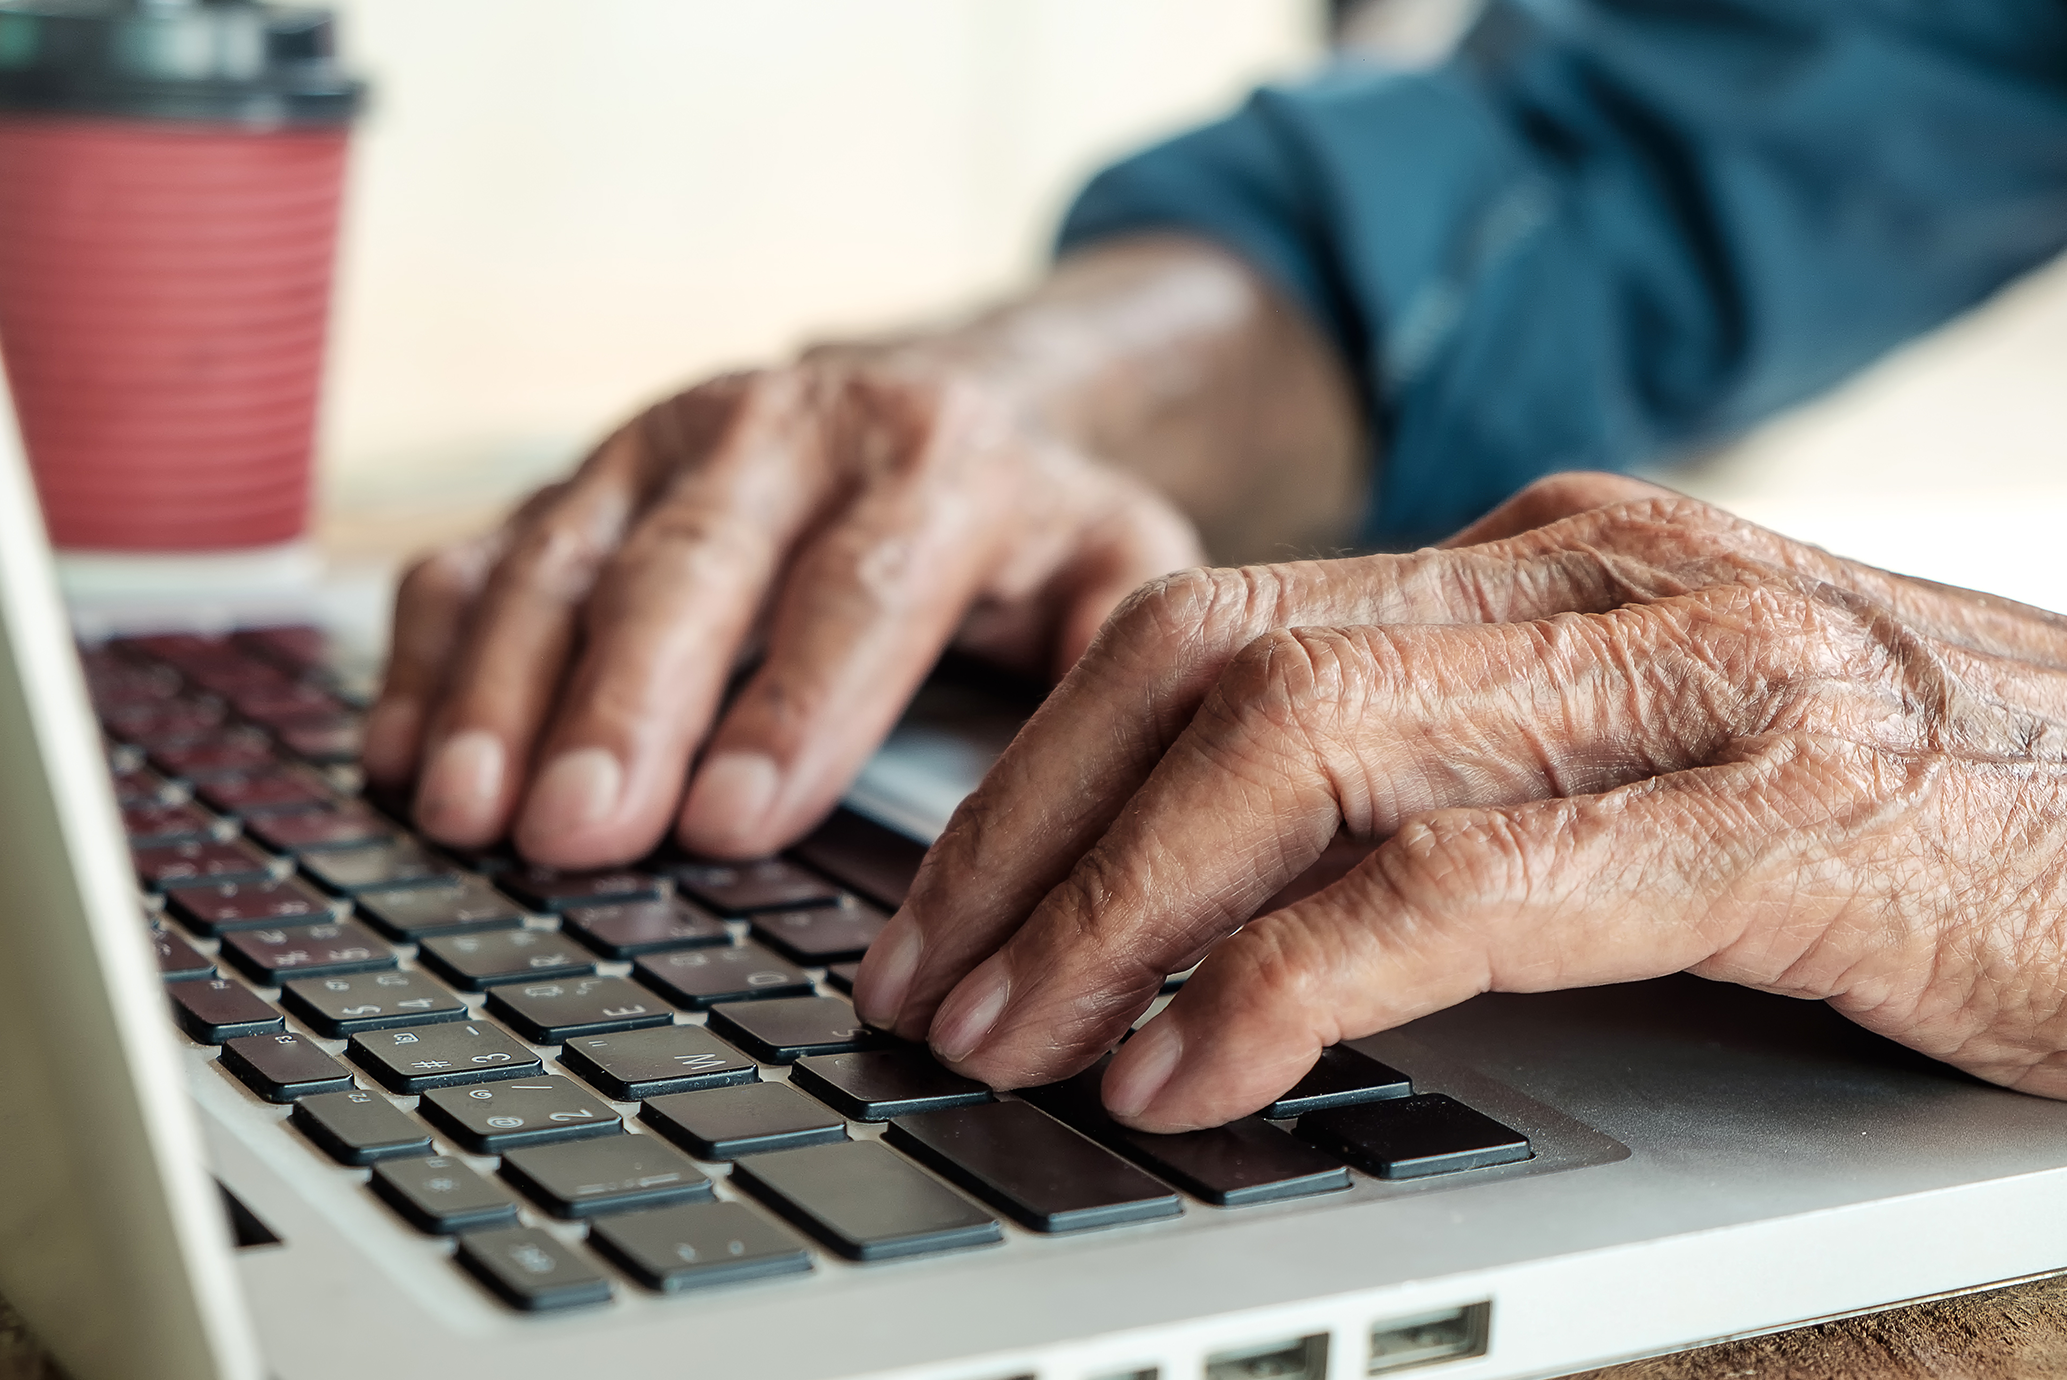 Elderly person using laptop